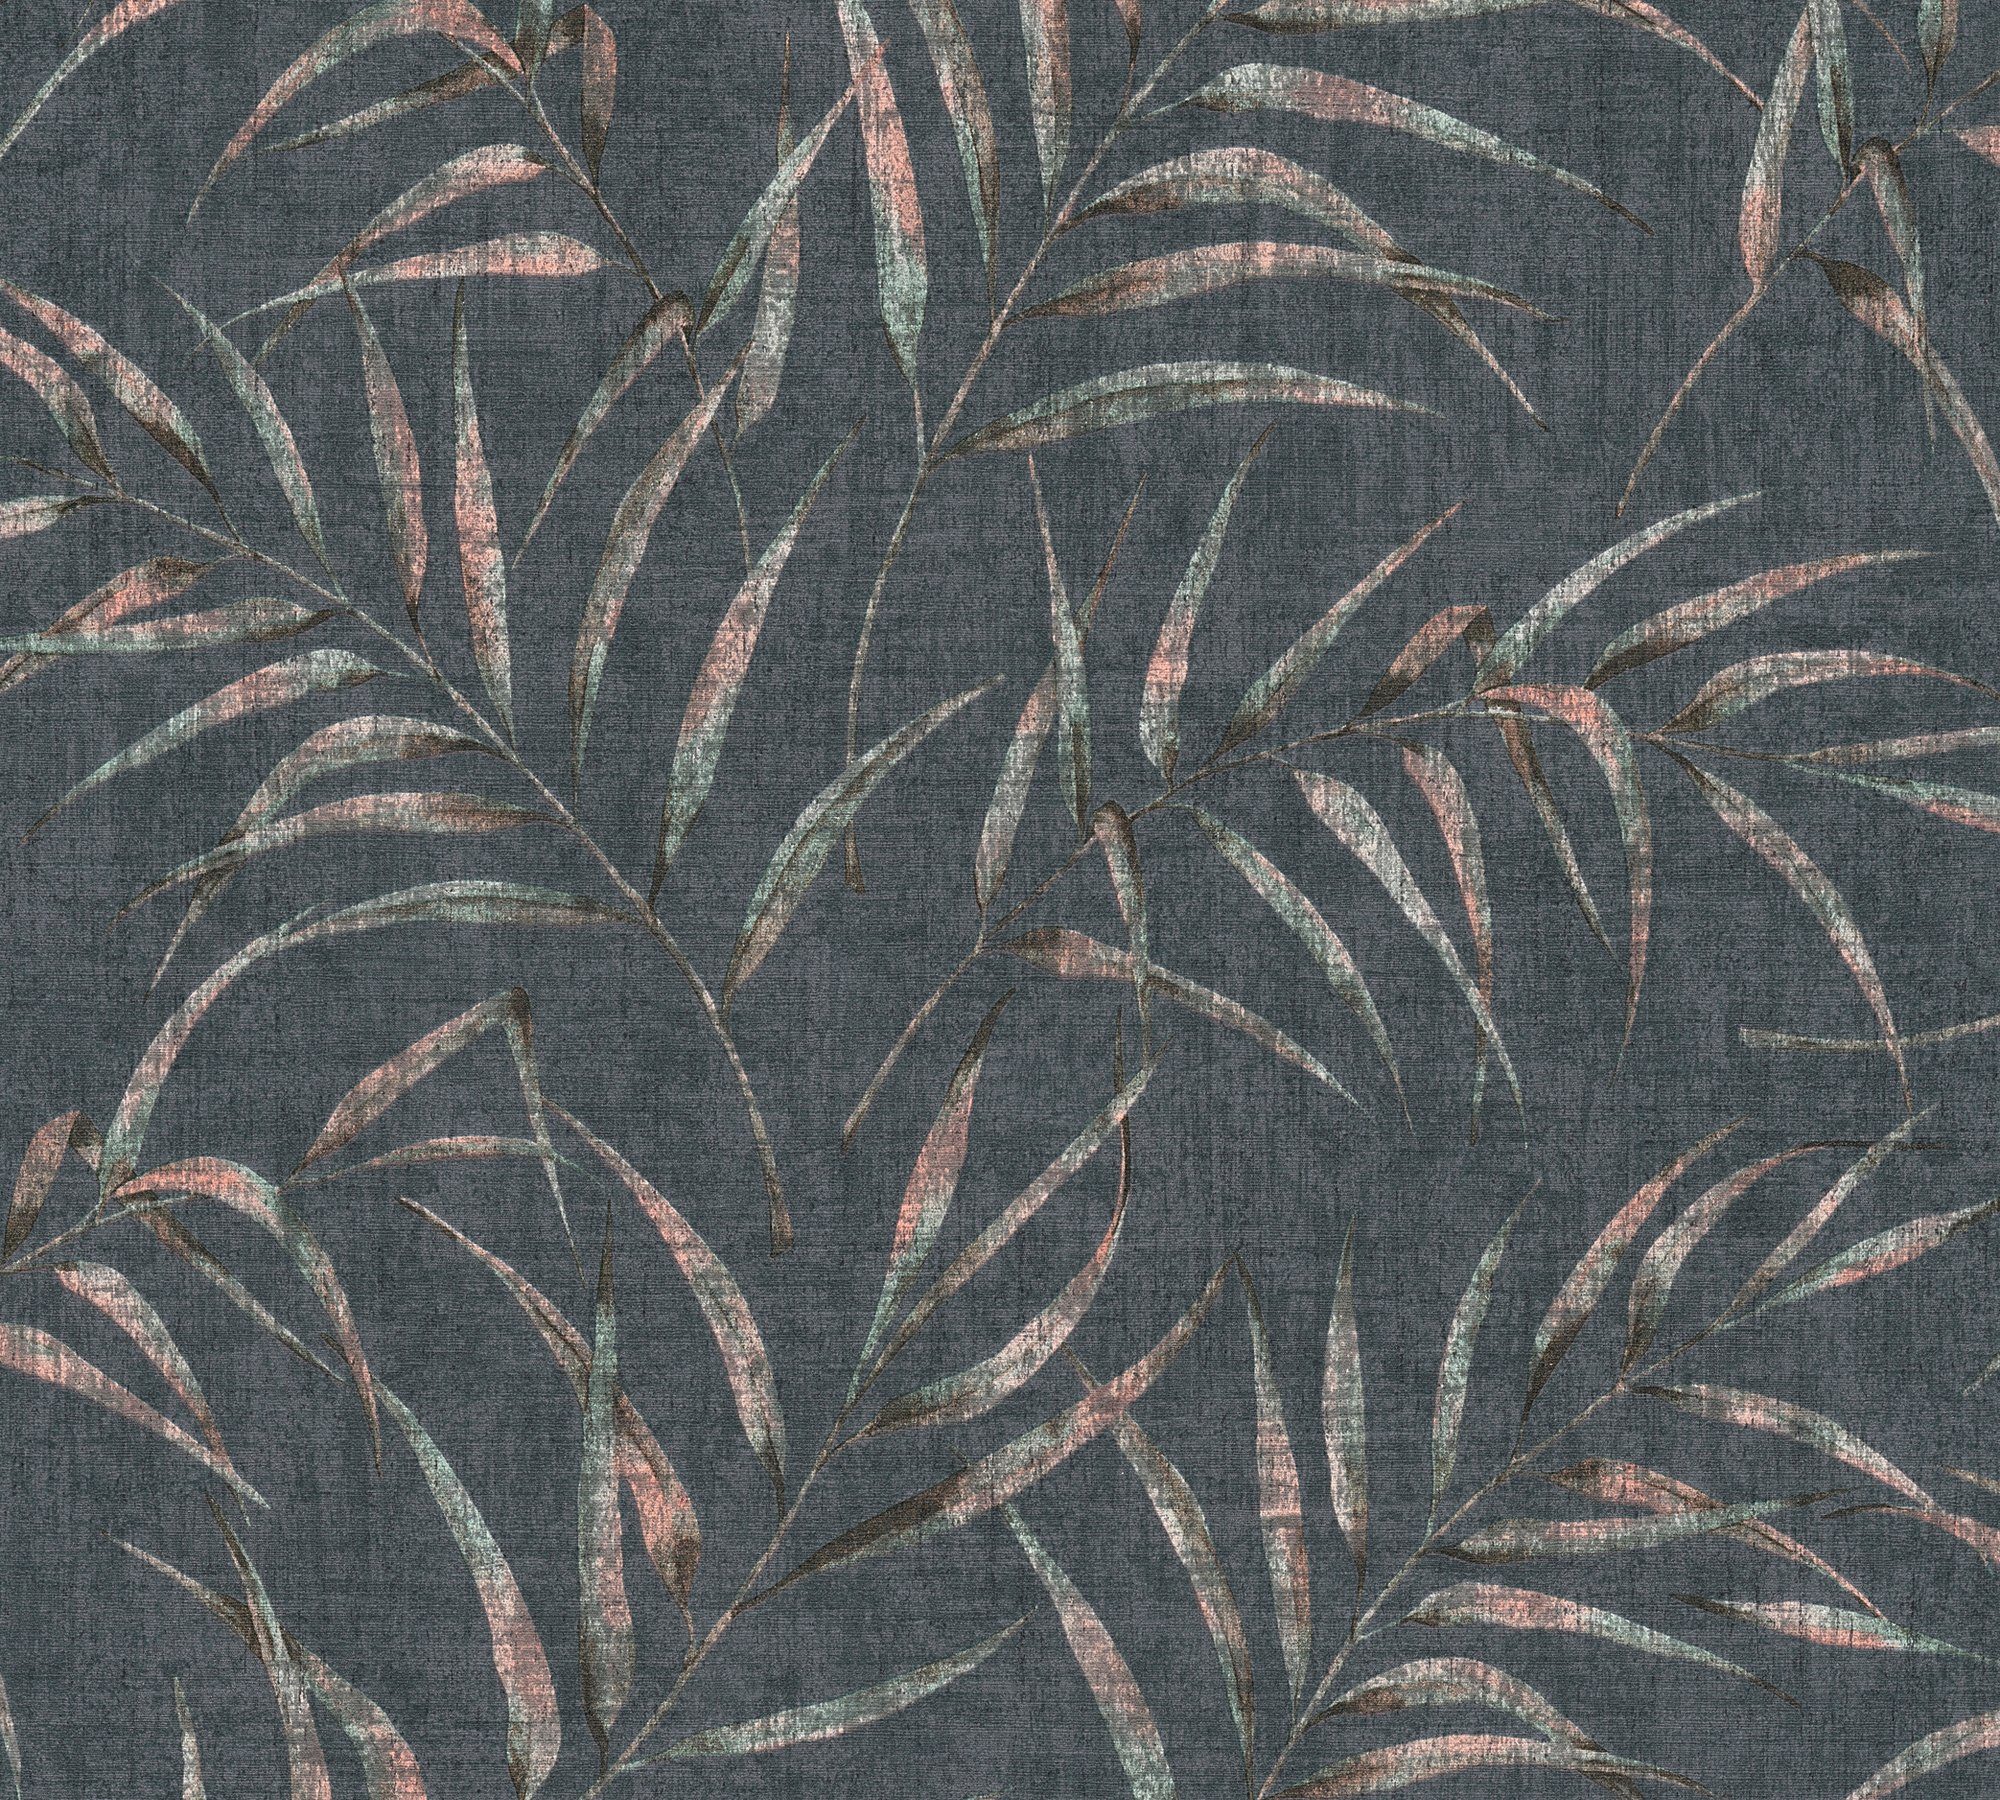 Dschungel Optik, in Tapete mit schwarz Palmenprint A.S. Dschungeltapete floral, Greenery Palmen Vliestapete Création